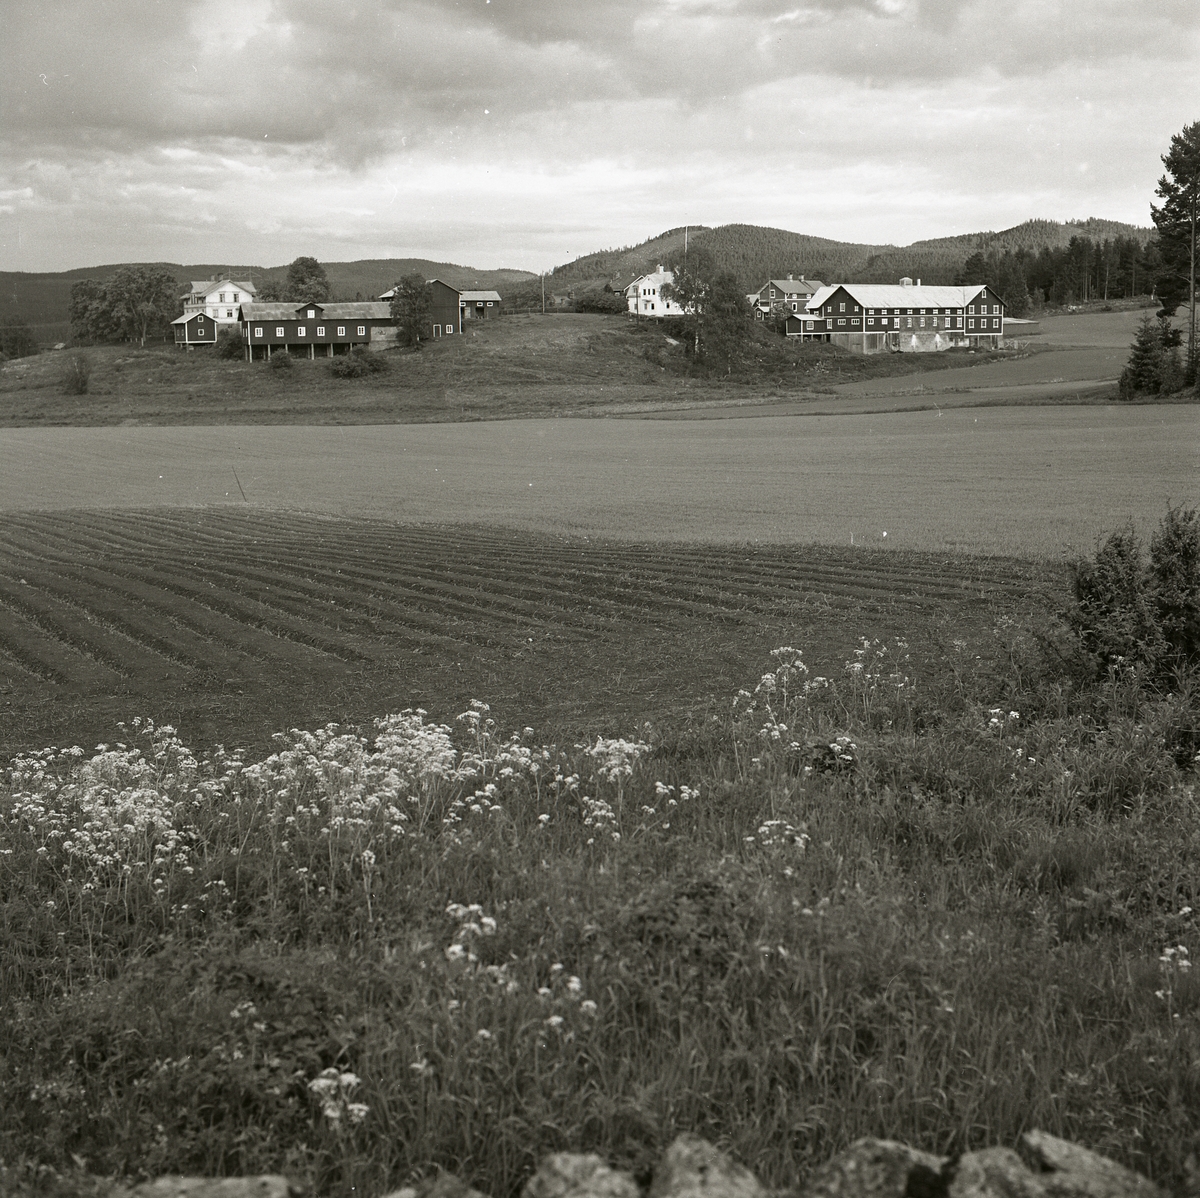 Jordbrukslandskap med bondgårdar i bakgrunden, Ljusdal 1982.